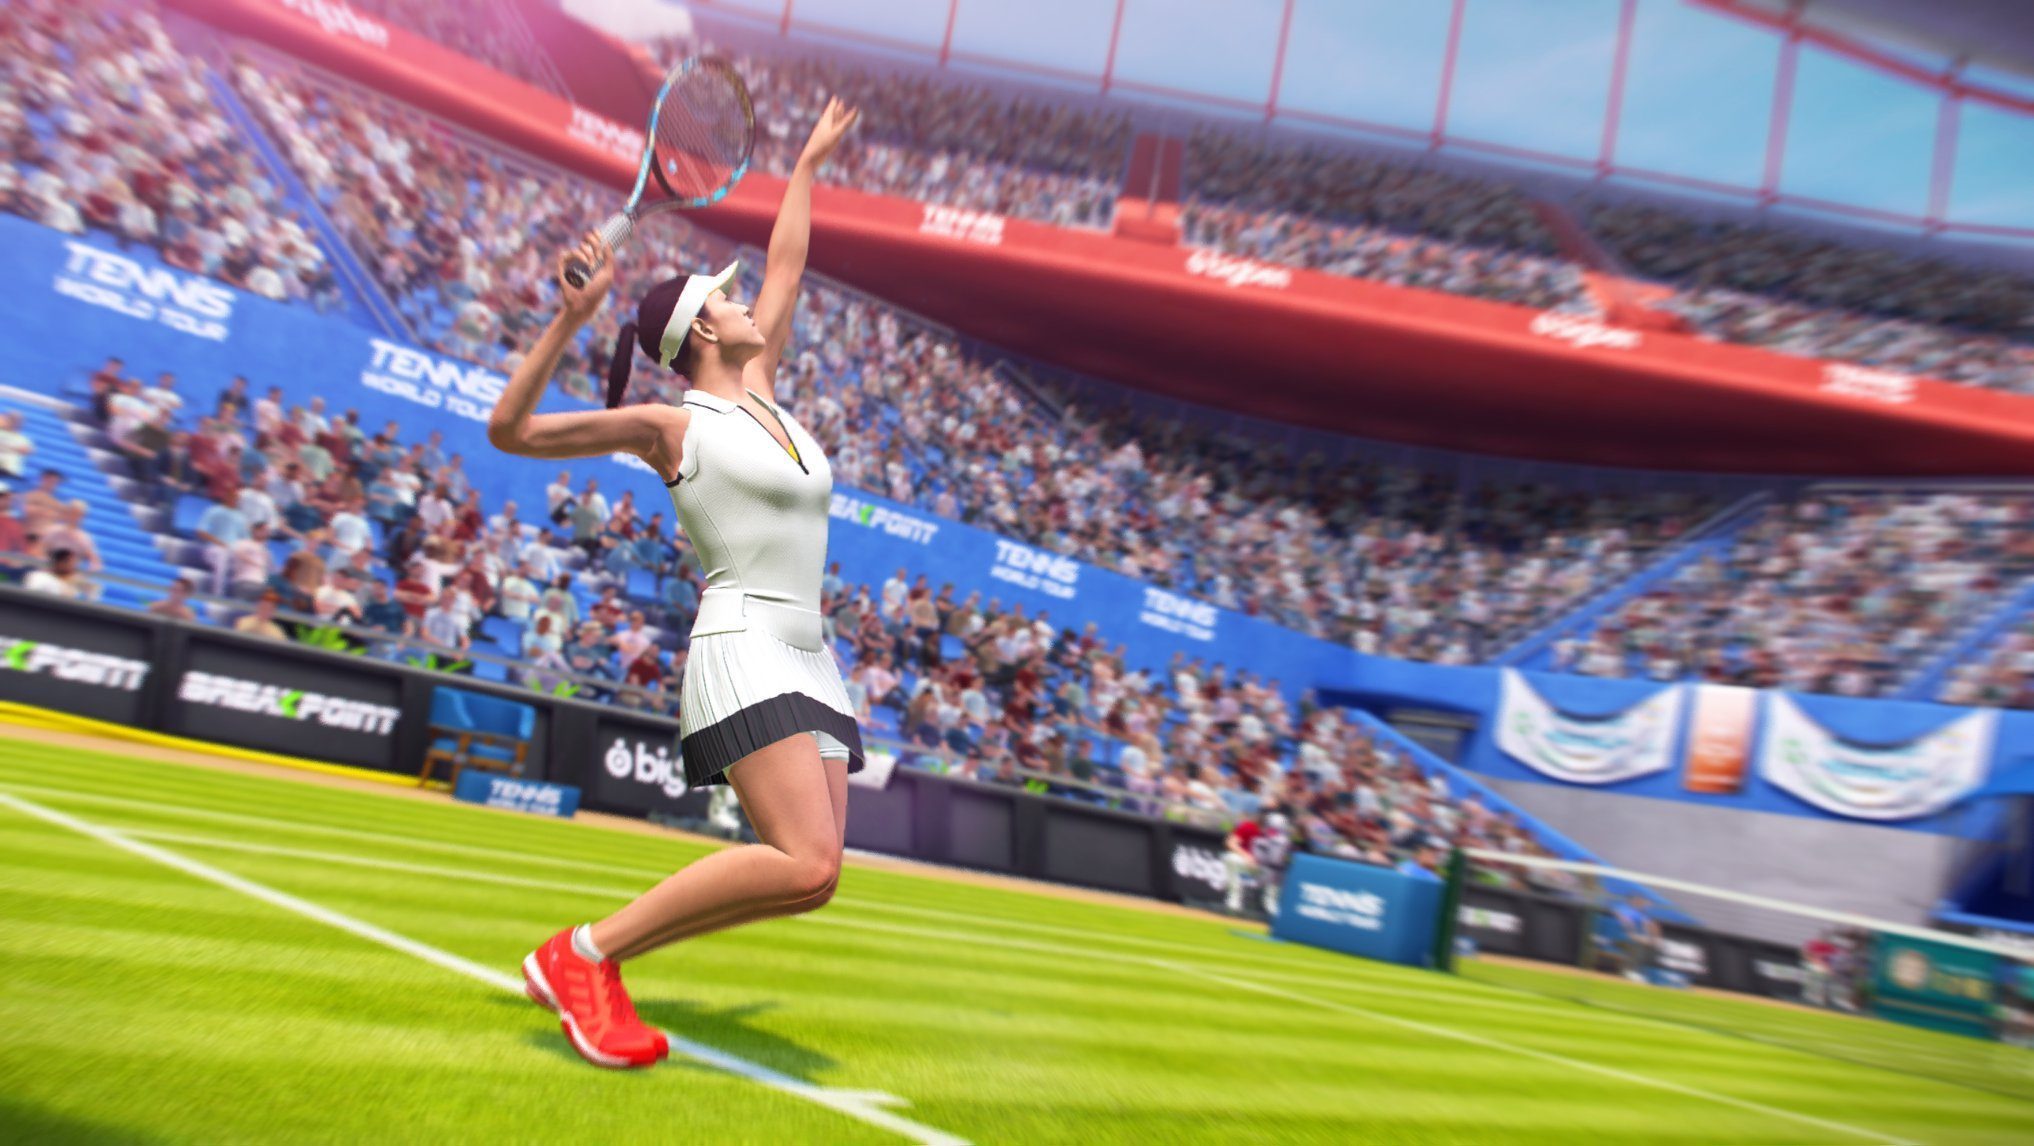 Análisis de Tennis World Tour para PS4